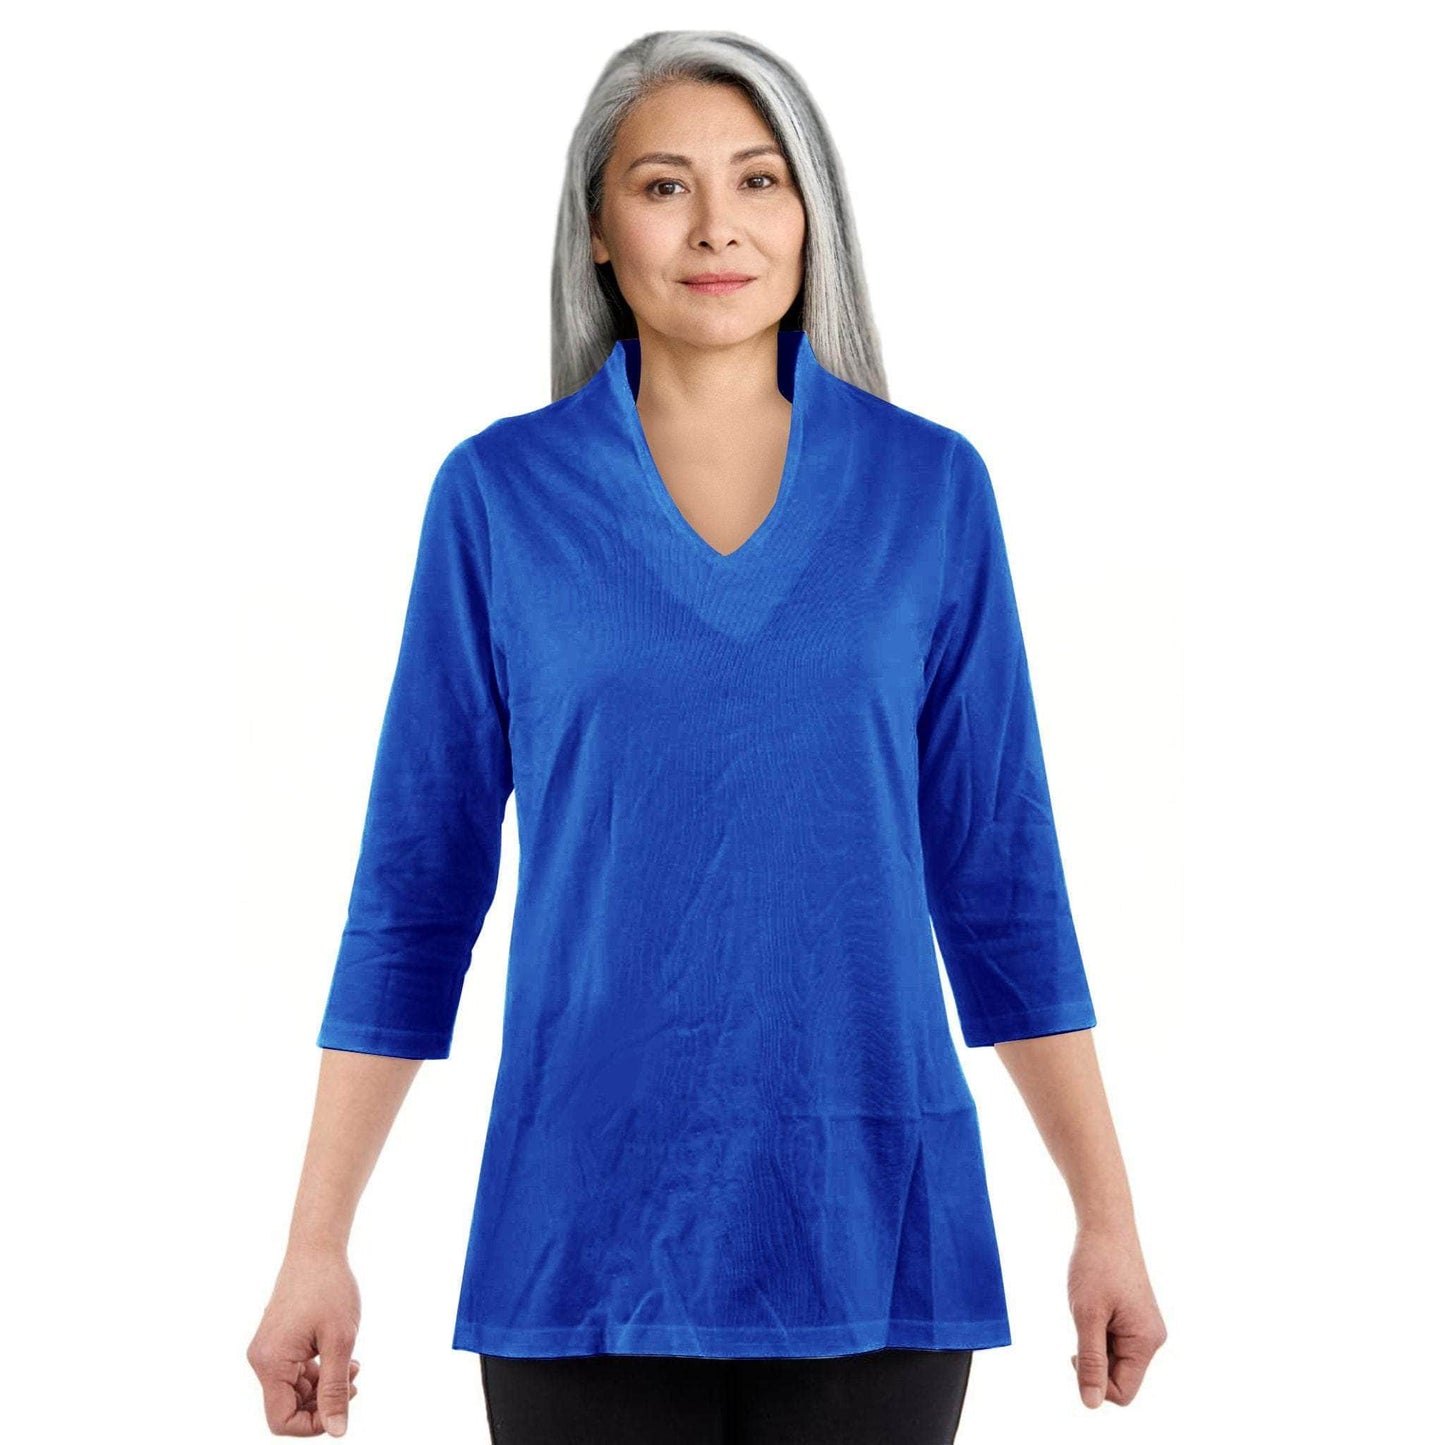 CC Women's Elizabeth 3/4 Sleeve V-Neck Top - Royal Blue - Caring Clothing